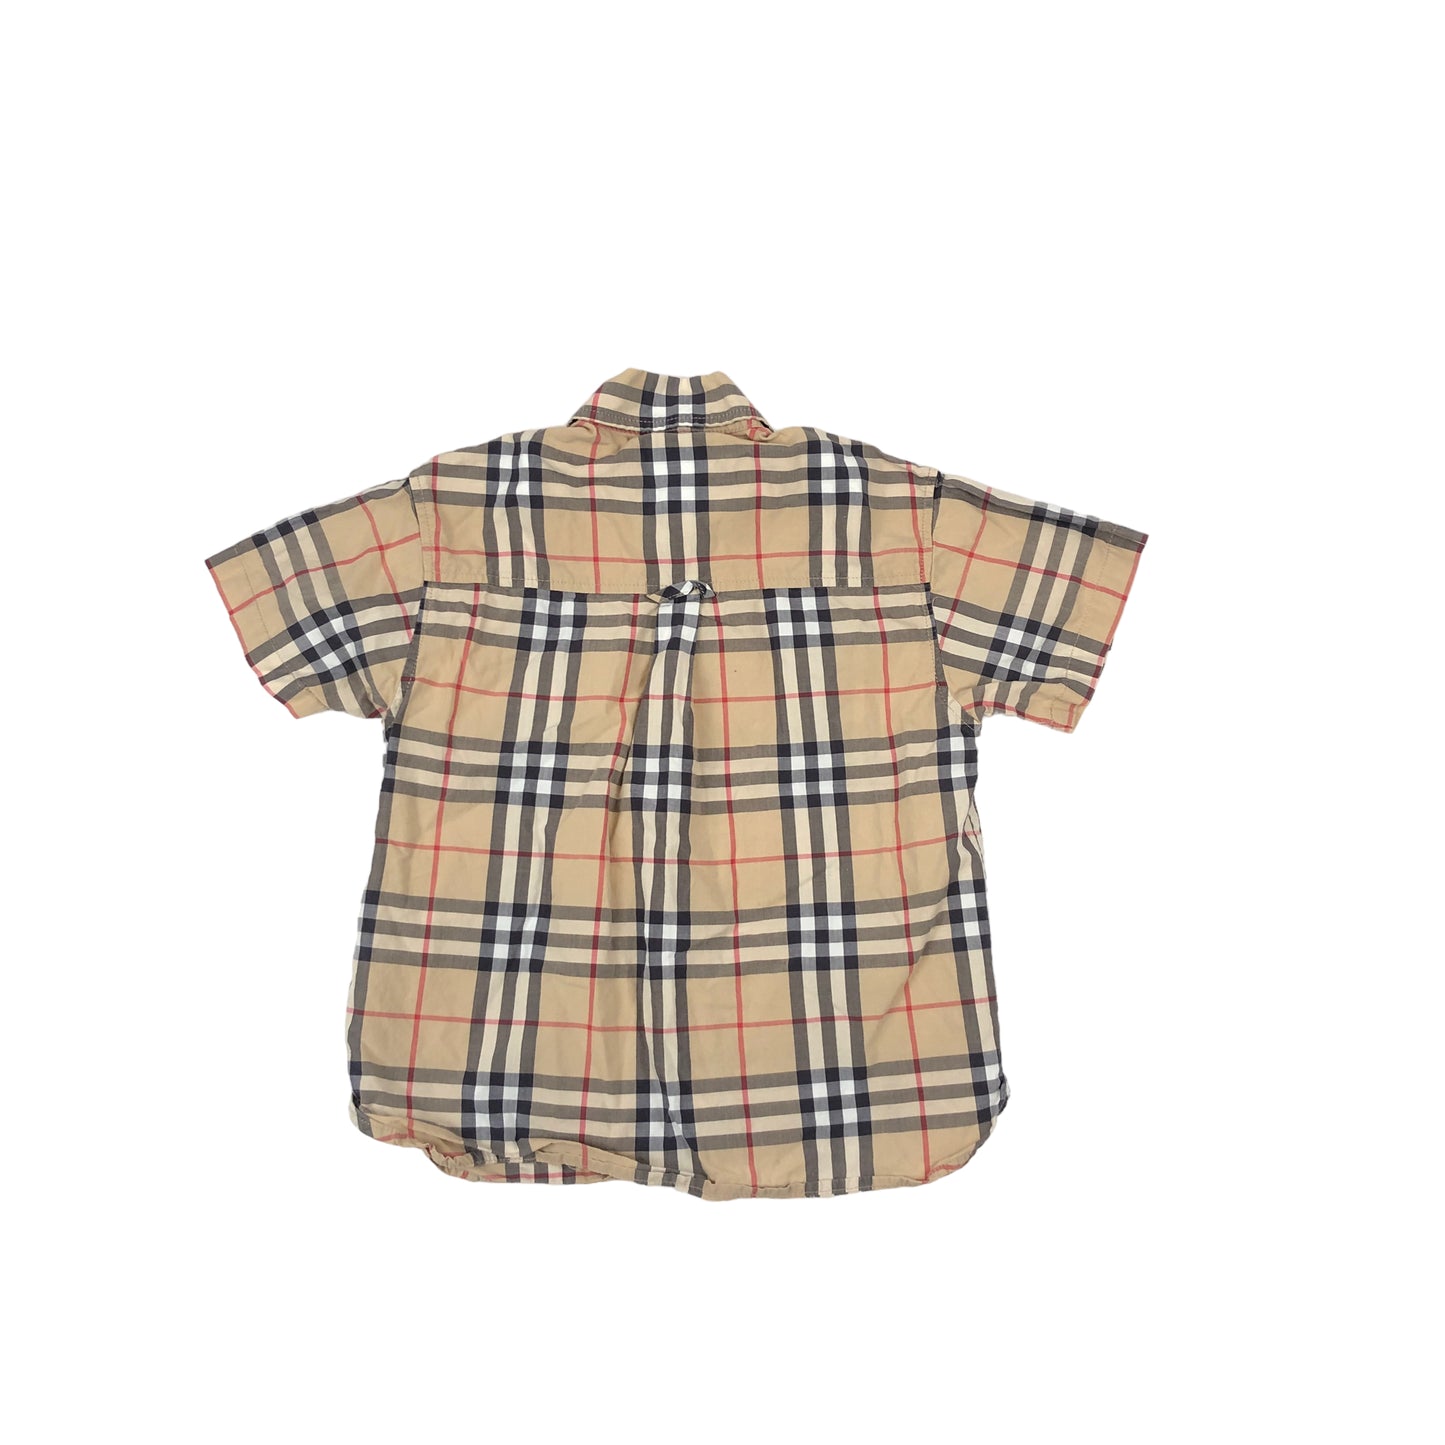 Vintage Nova Check Burberry Shirt (Age 3)